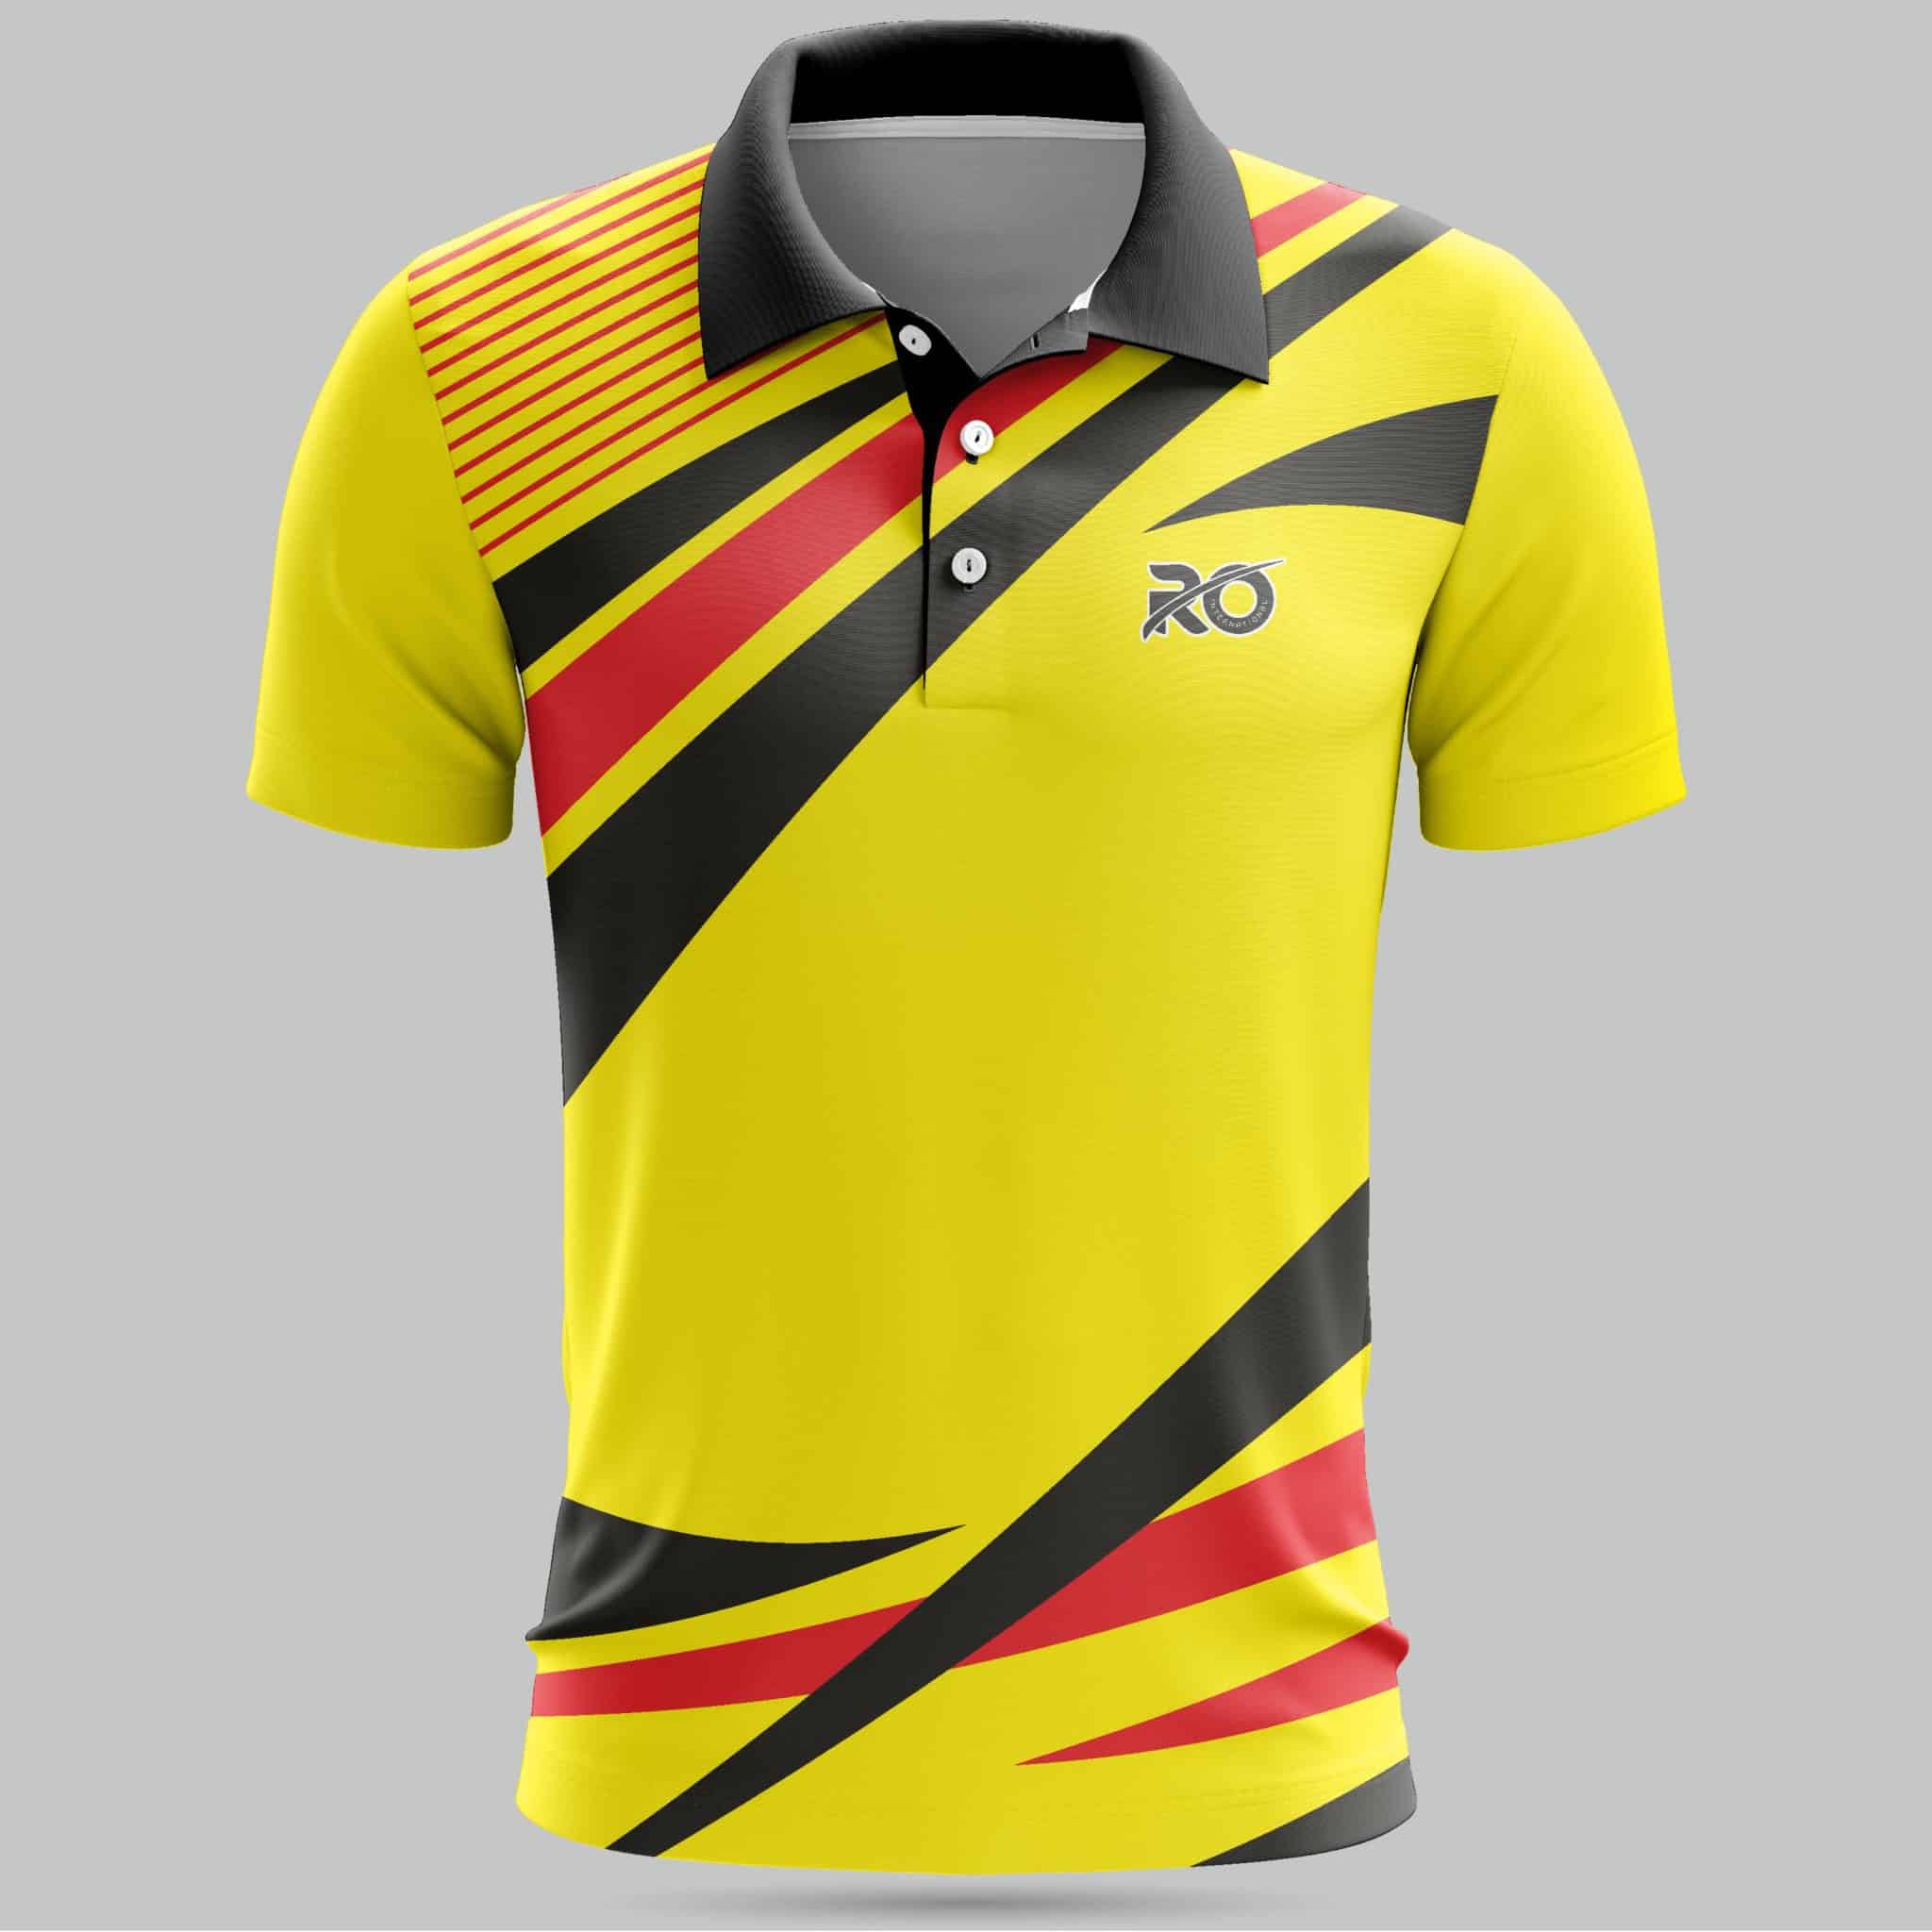 Ro Cricket Jersey Yellow Black Red - RO International